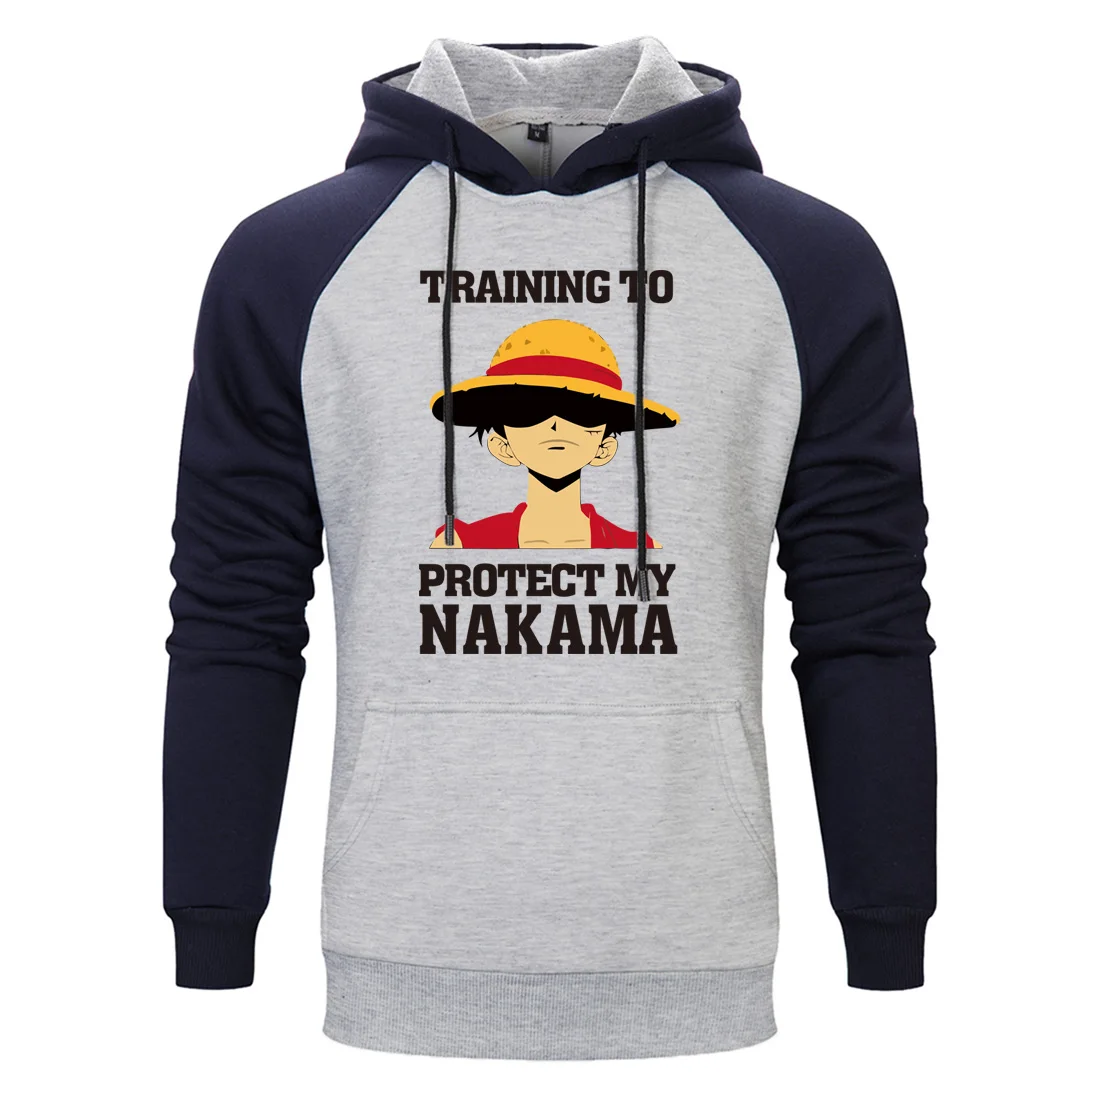 

Anime Printed Sweatshirt Clothing Hoody One Piece Mens Raglan 2020 New Warm hoodies spring autumn Cool Luffy hot Funny tracksuit